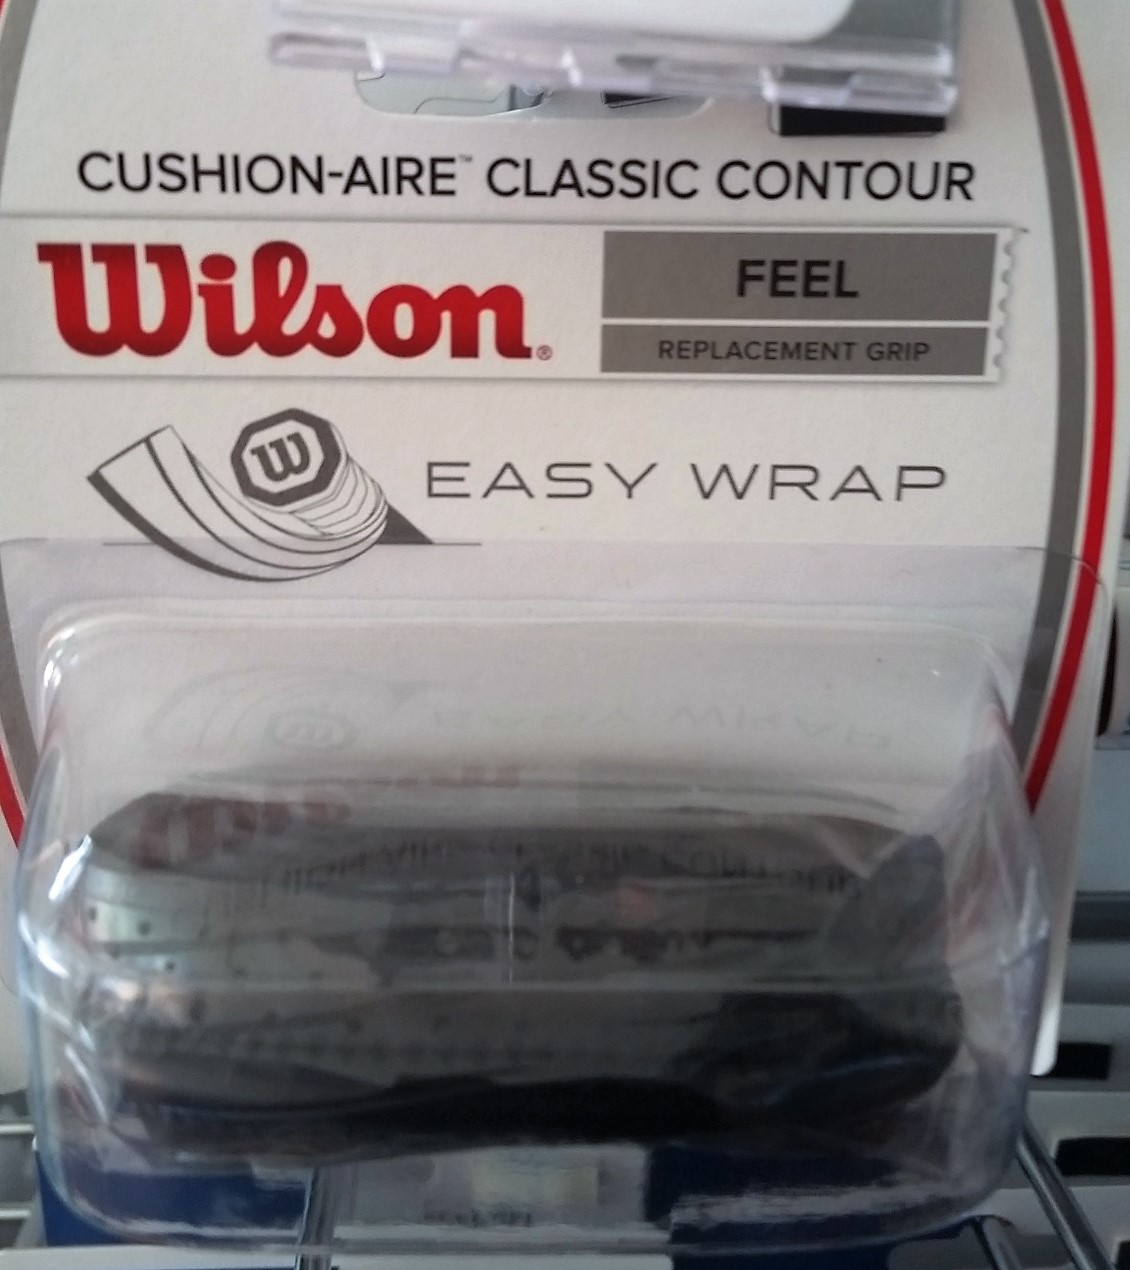 Wilson Cushion-Aire Classic Contour Grip